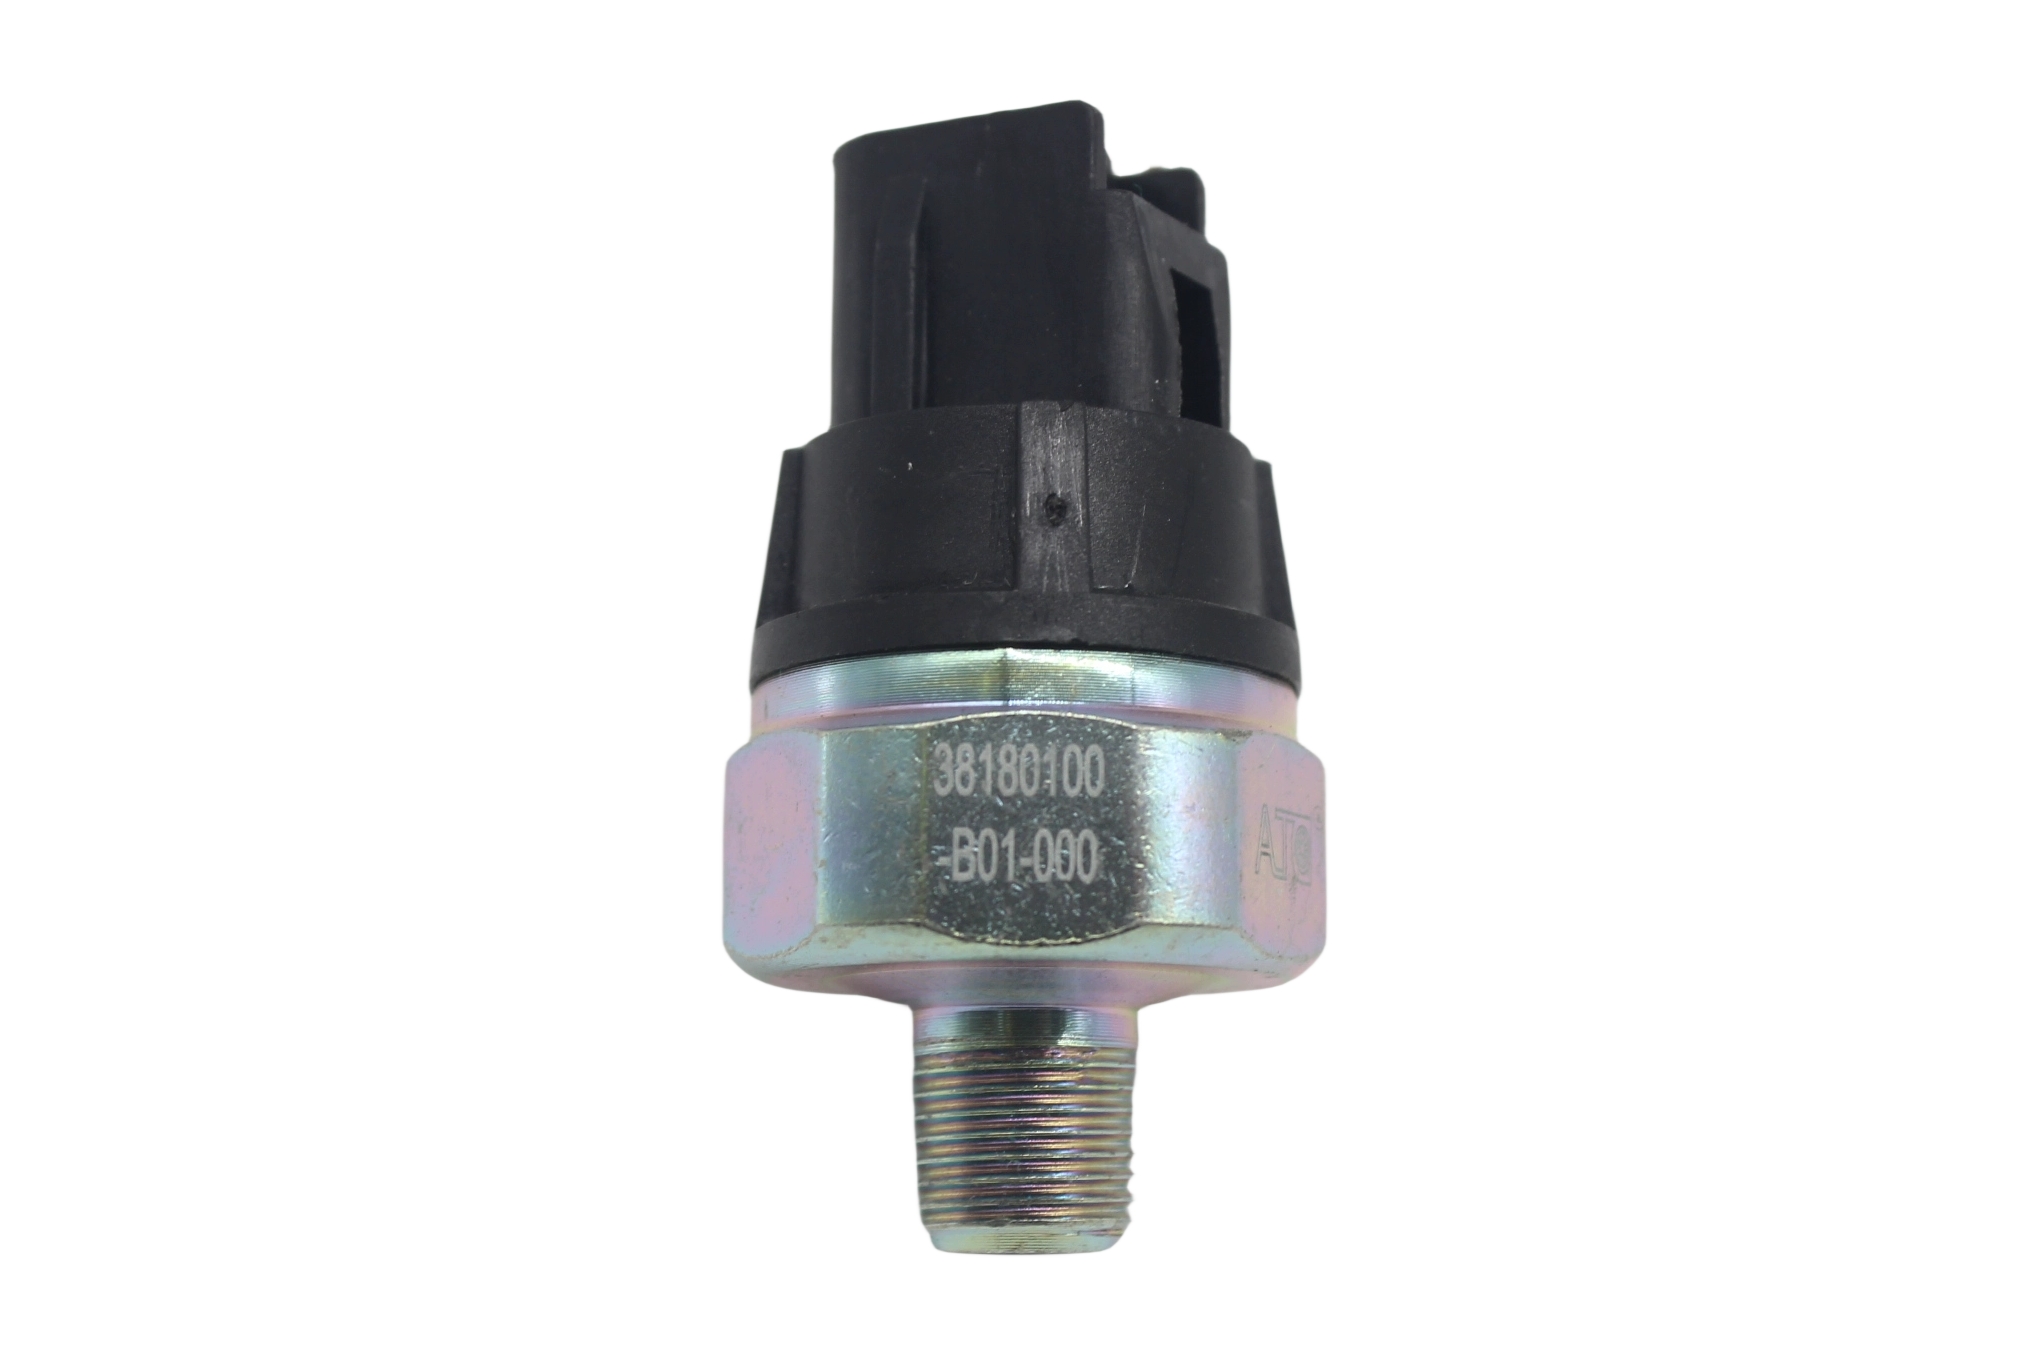 OPS8A129
                                -  X30  17-
                                - Oil Pressure Switch
                                ....255373